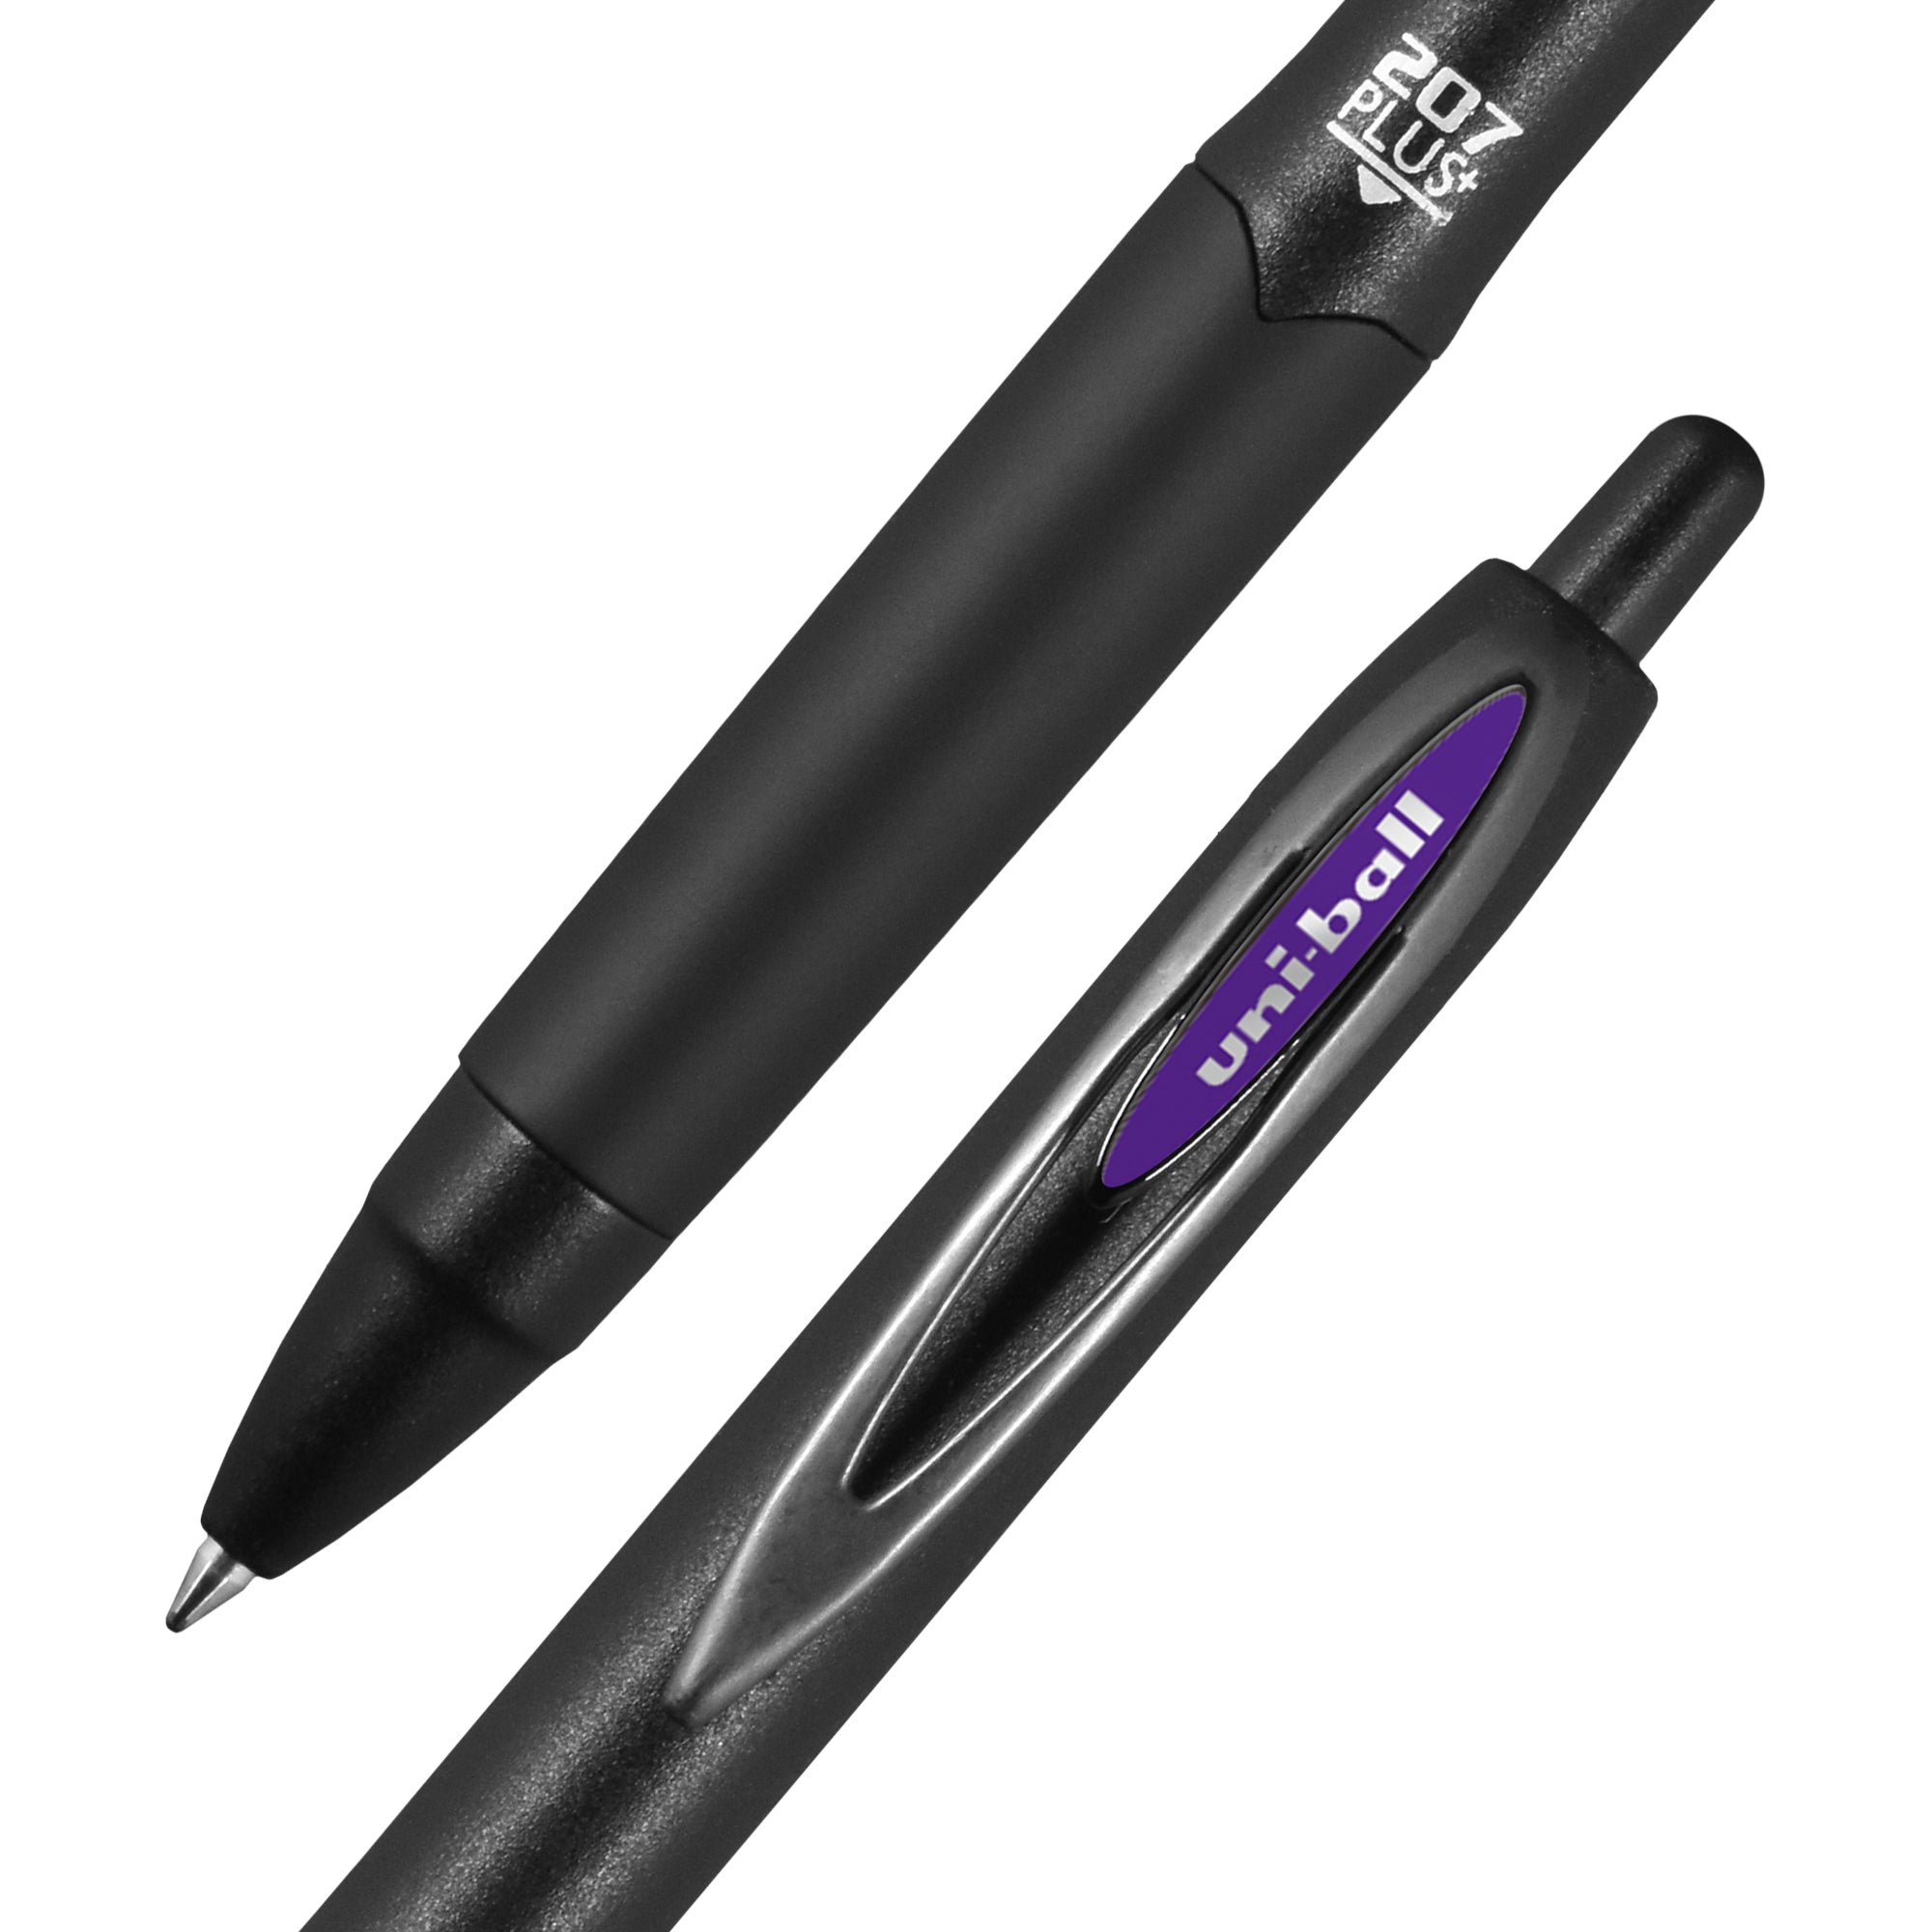 uniball™ 207 Plus+ Retractable Gel Pens, Medium Point (0.7mm), Assorted, 6 Pack